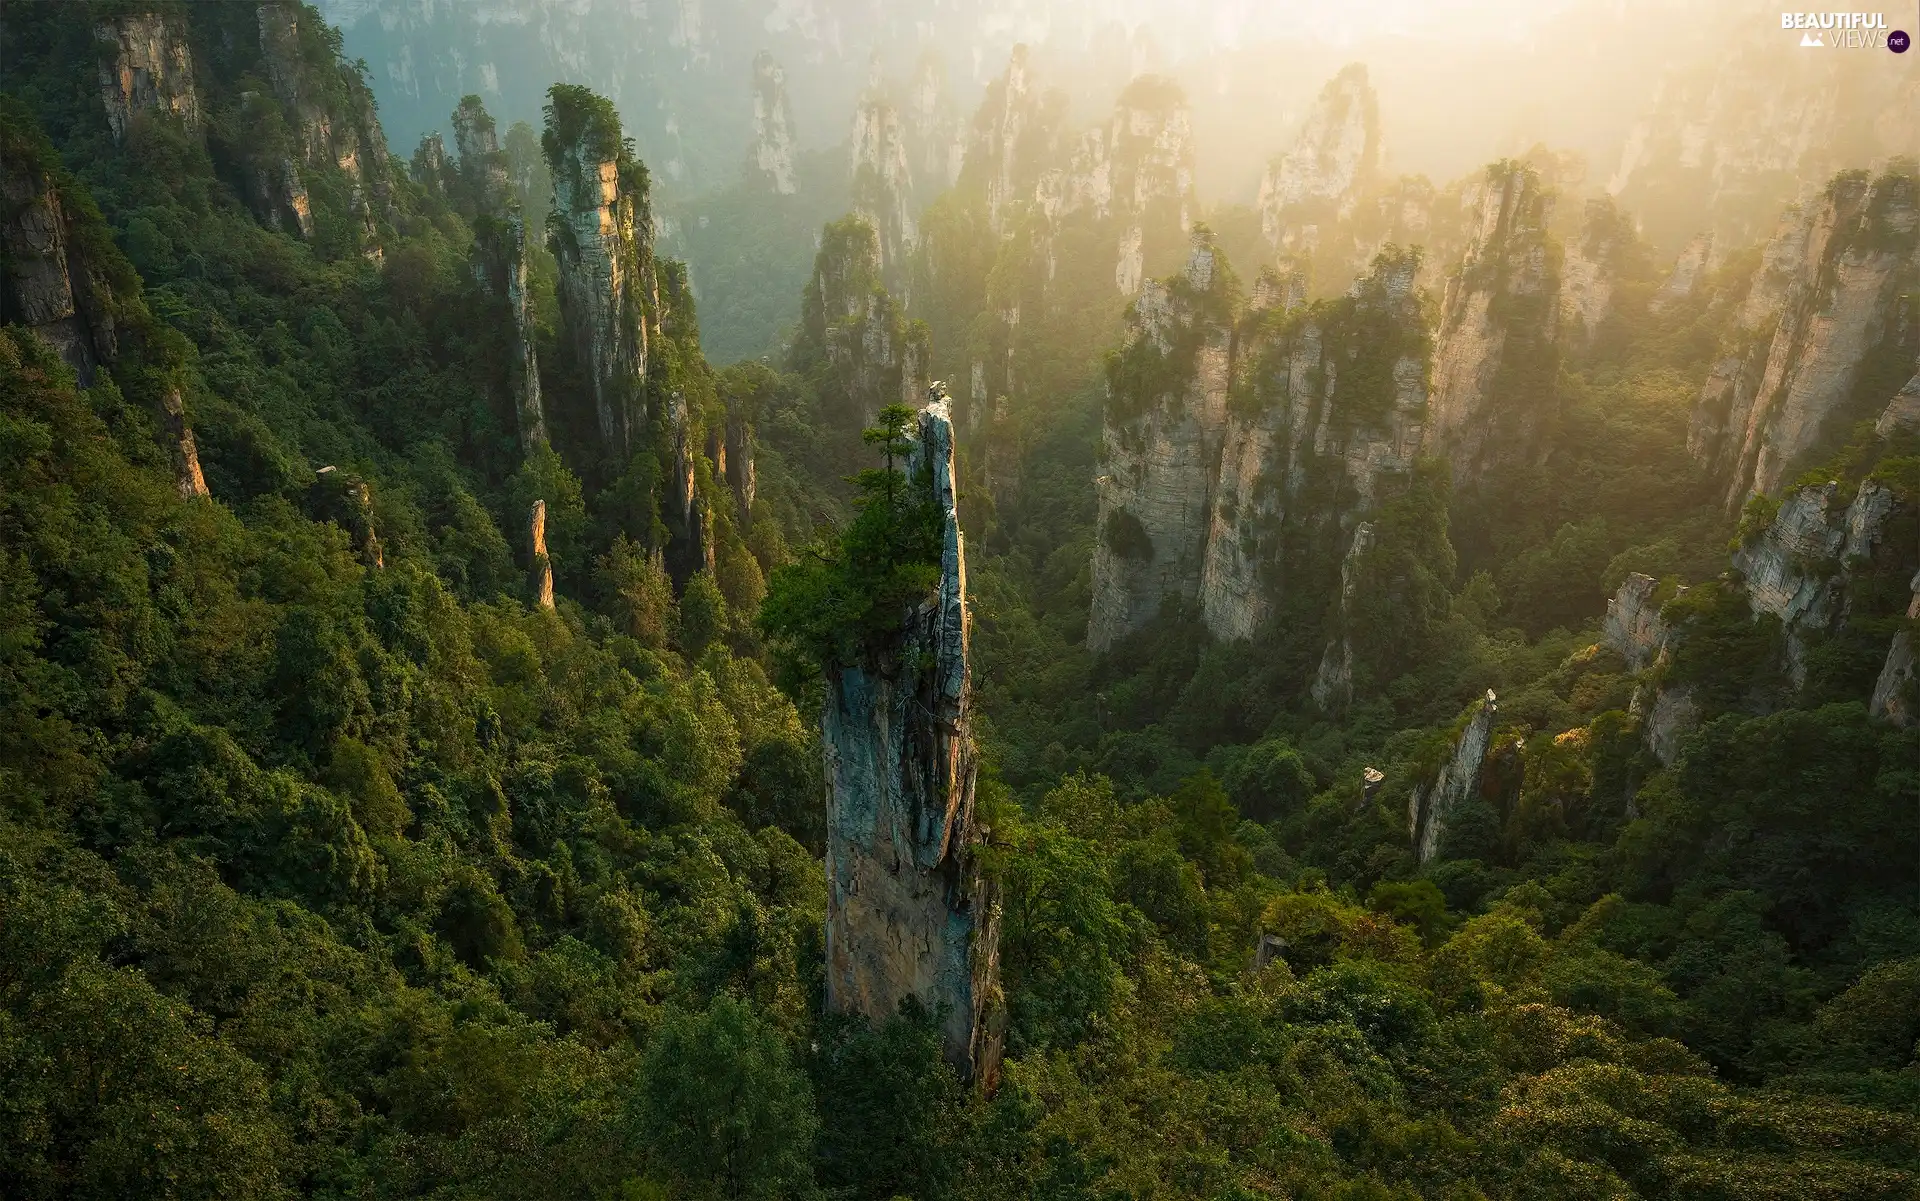 Hunan, China, rocks, Zhangjiajie National Forest Park, forest